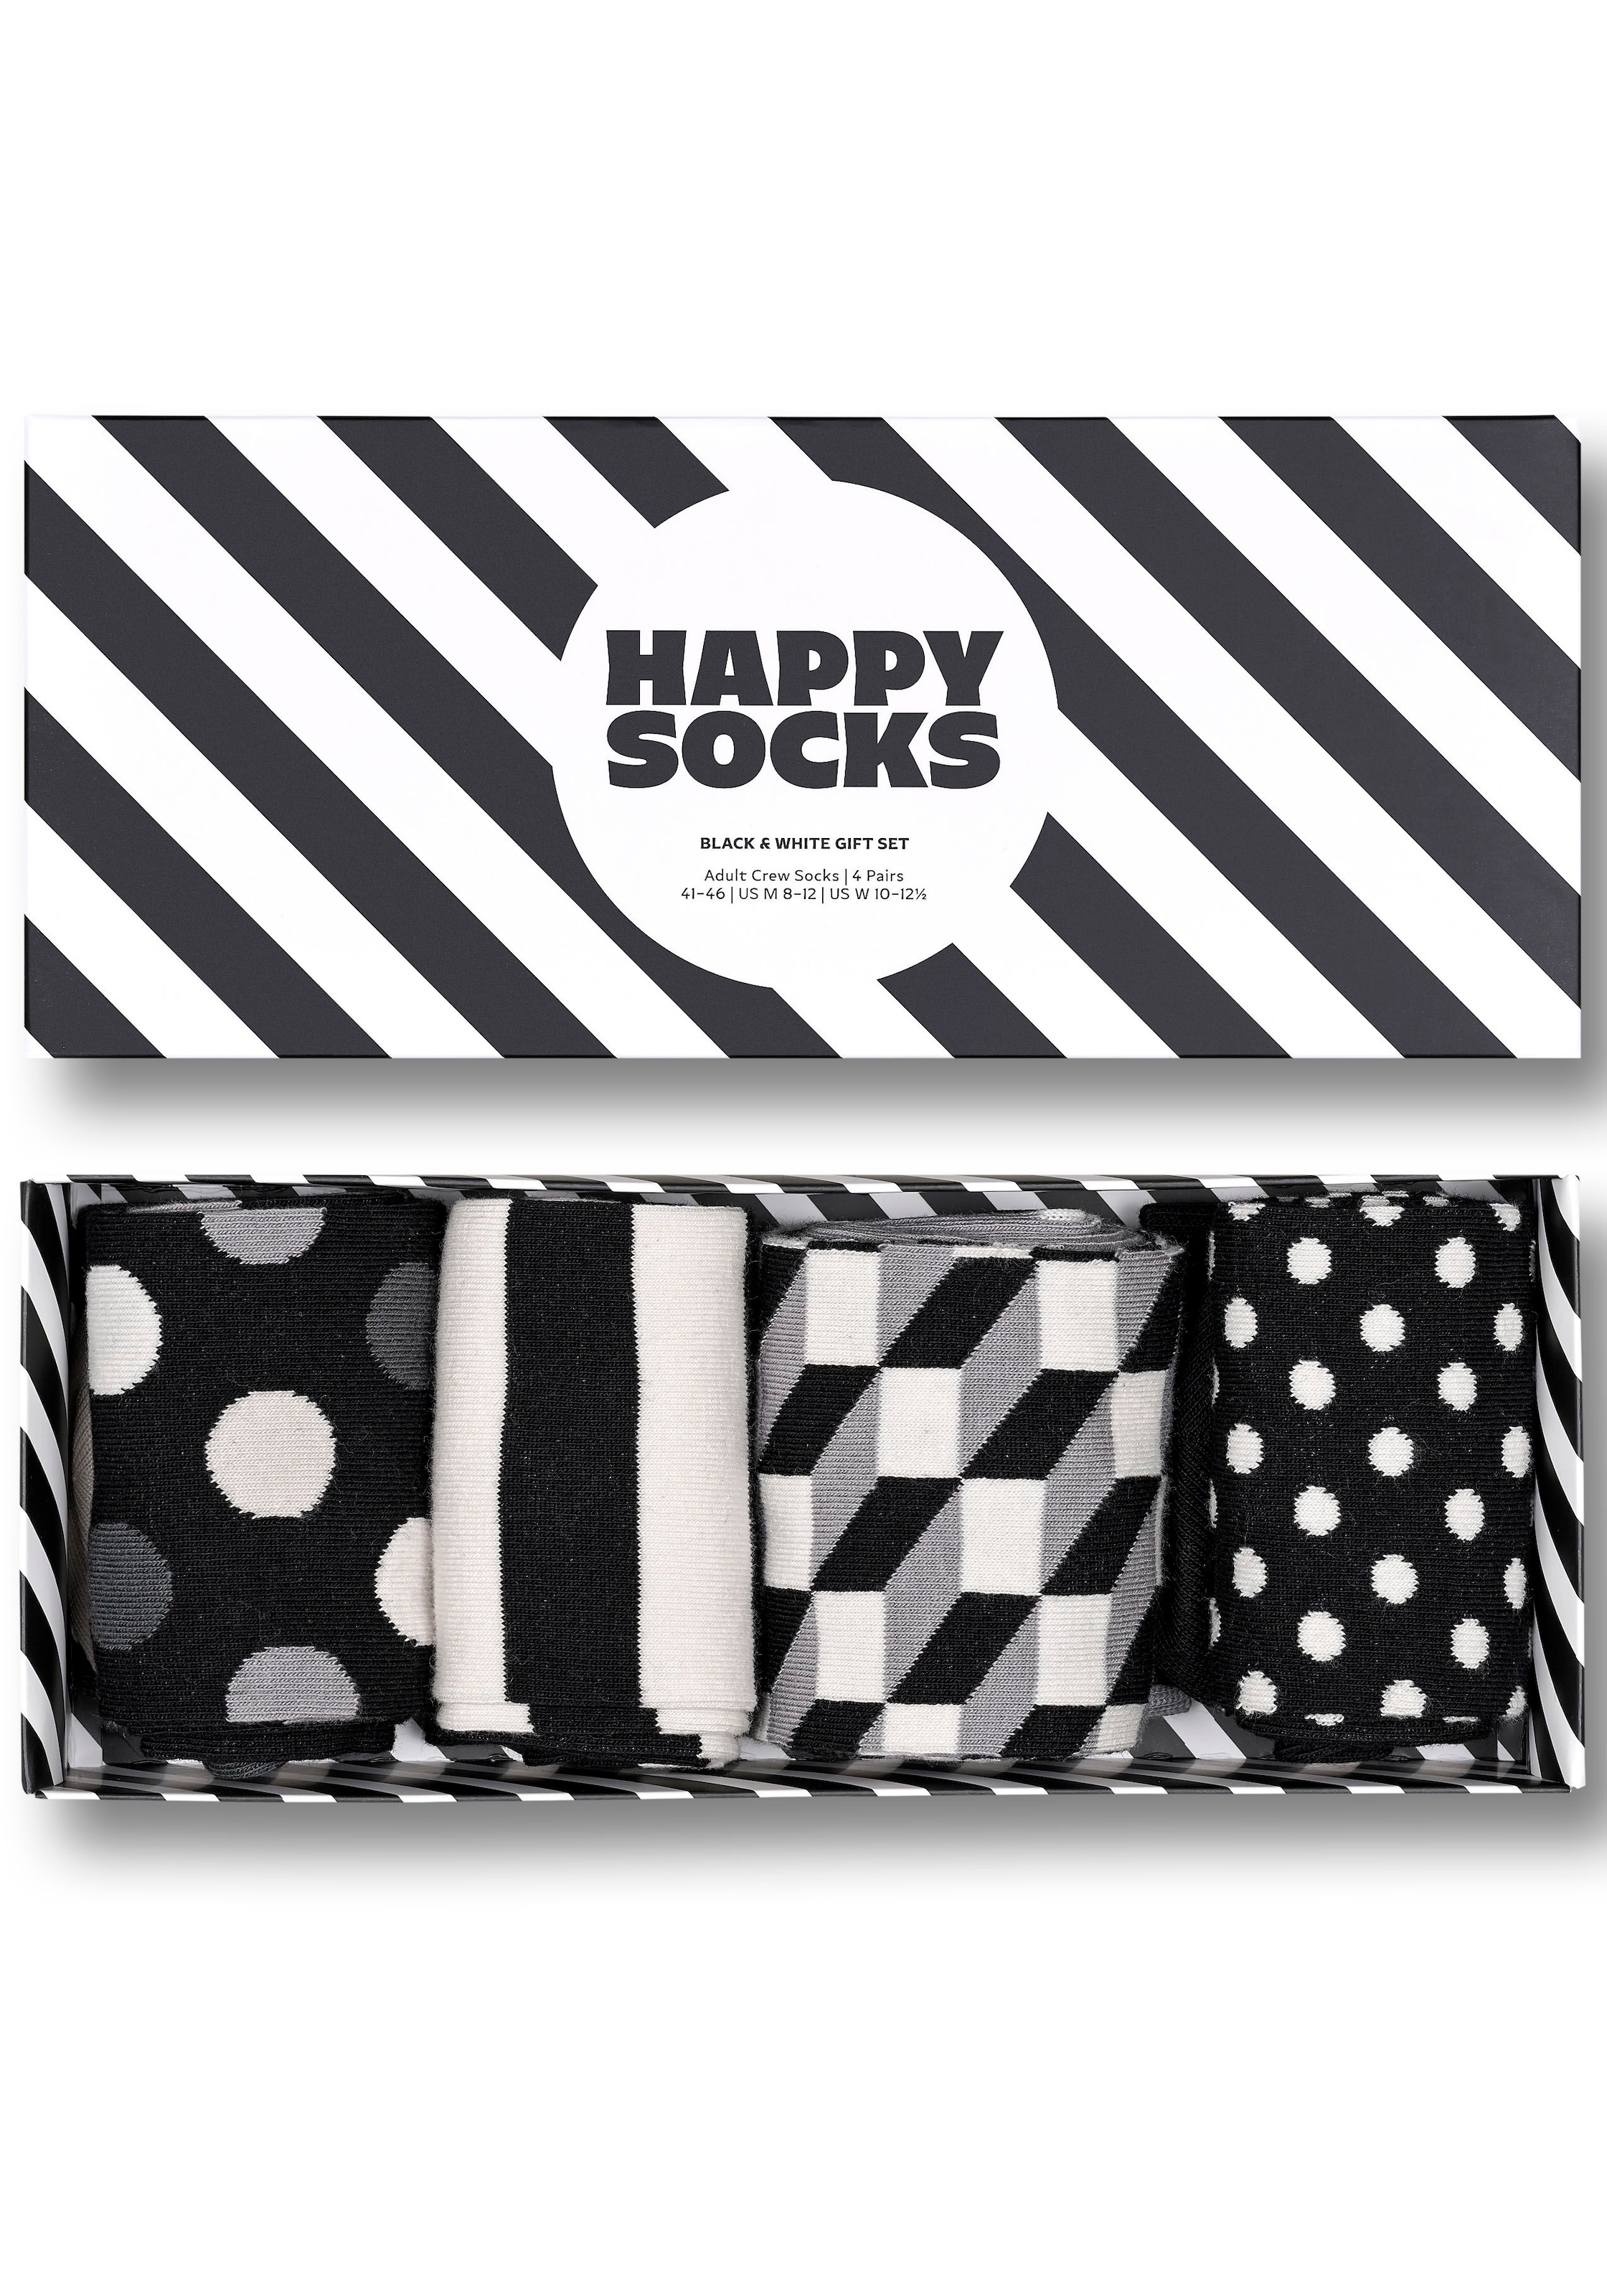 Happy Socks kaufen Gift Socks bei OTTO & Paar), Classic Black 4 White Set (Packung, Socken